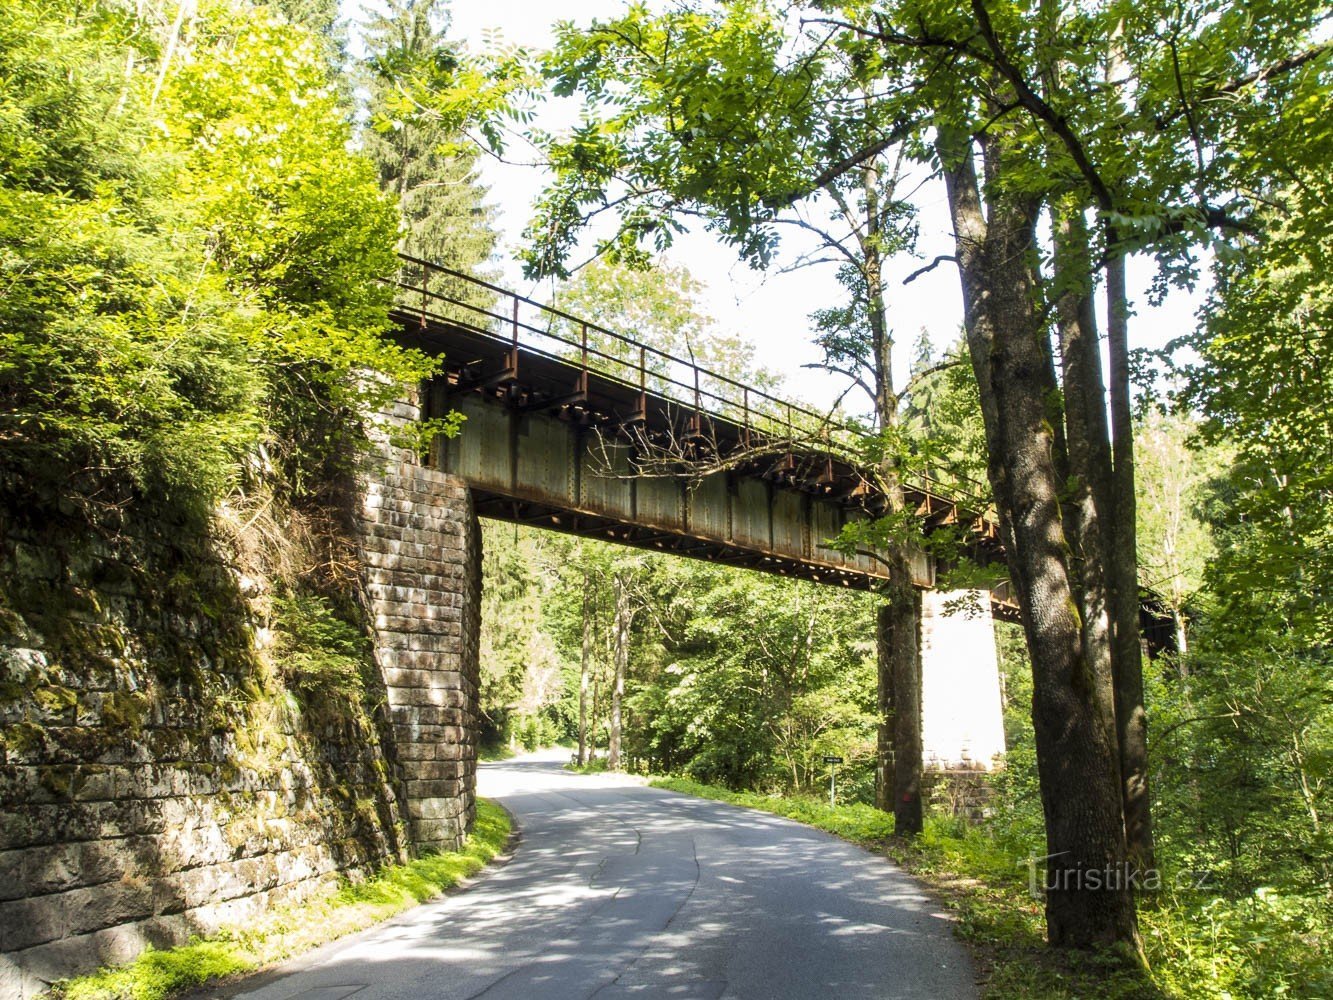 Viadukt nad Krupou